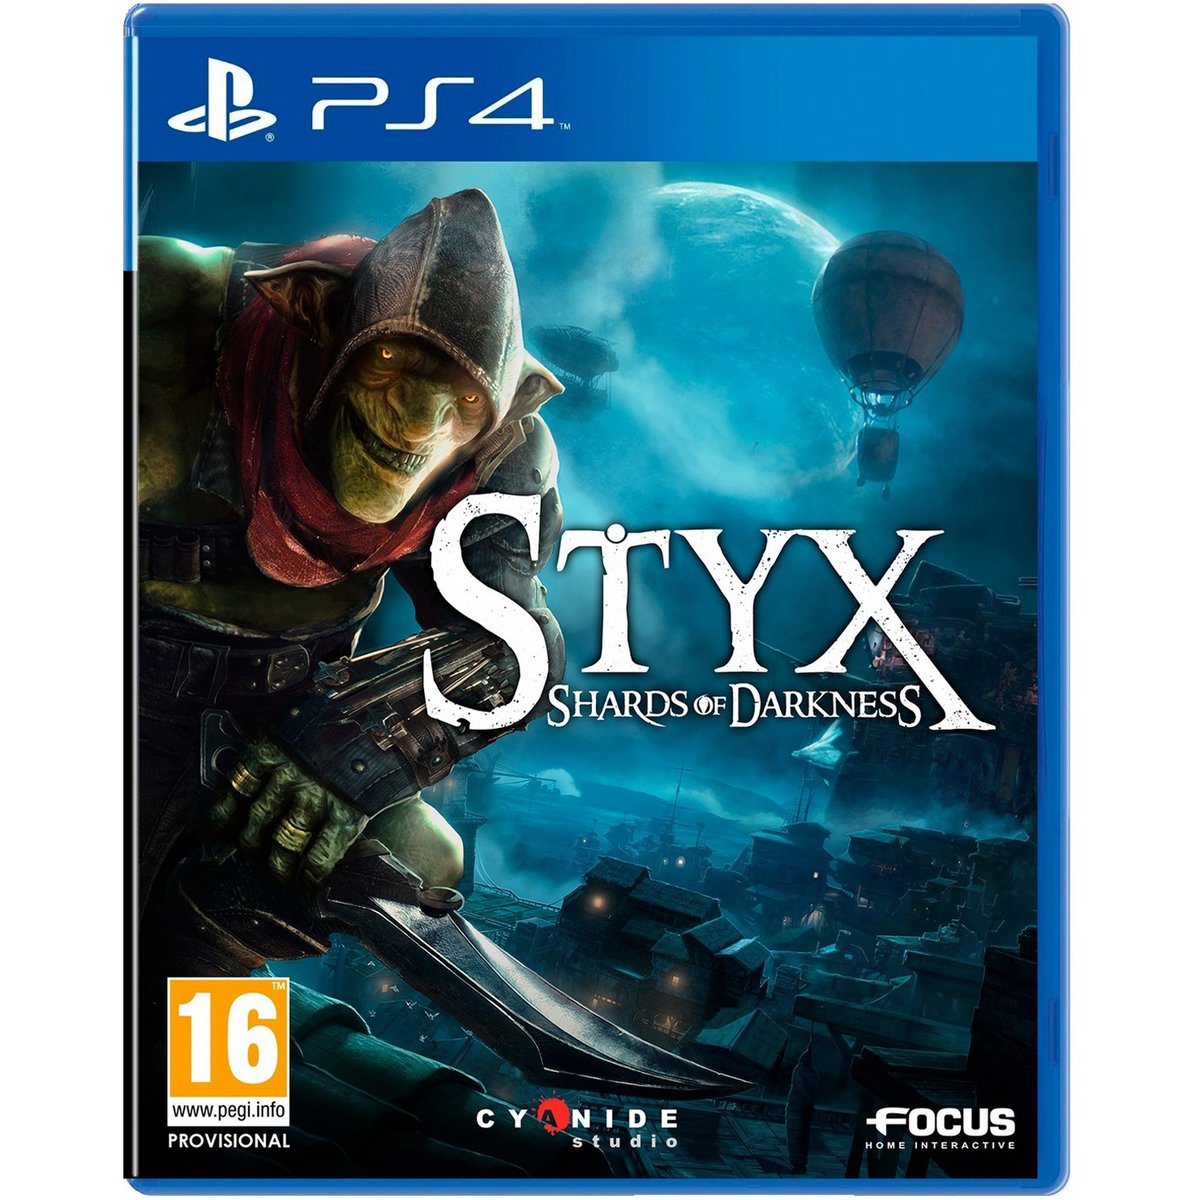 PS4 Styx: Shards Of Darkness